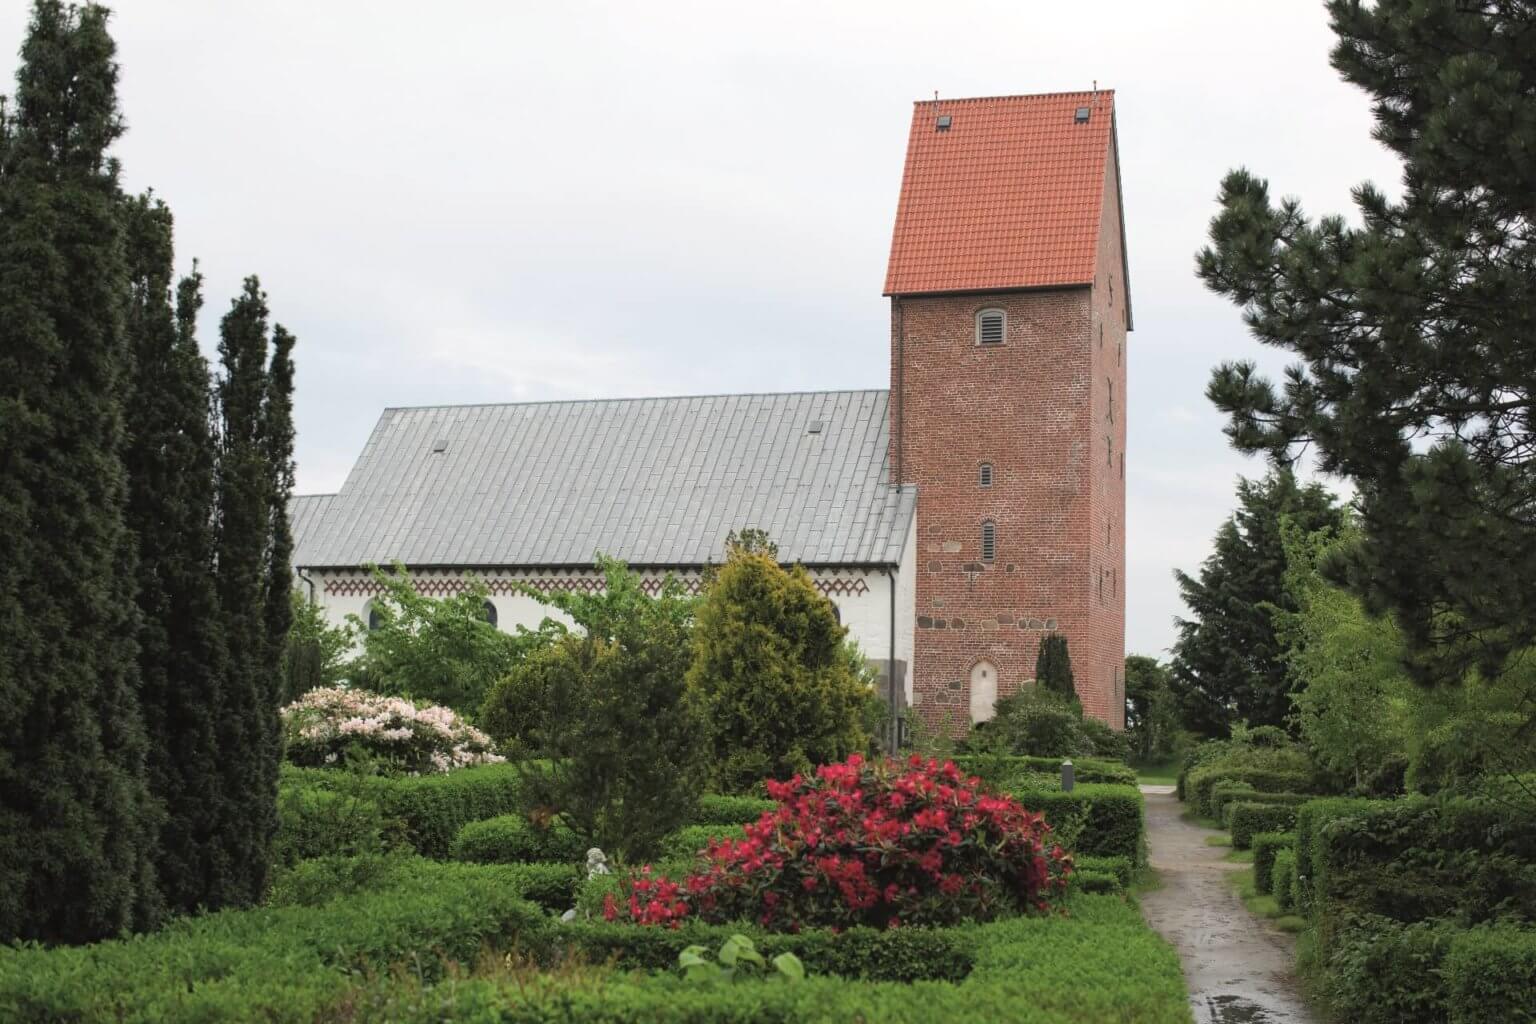 St. Severin Kirche in Keitum